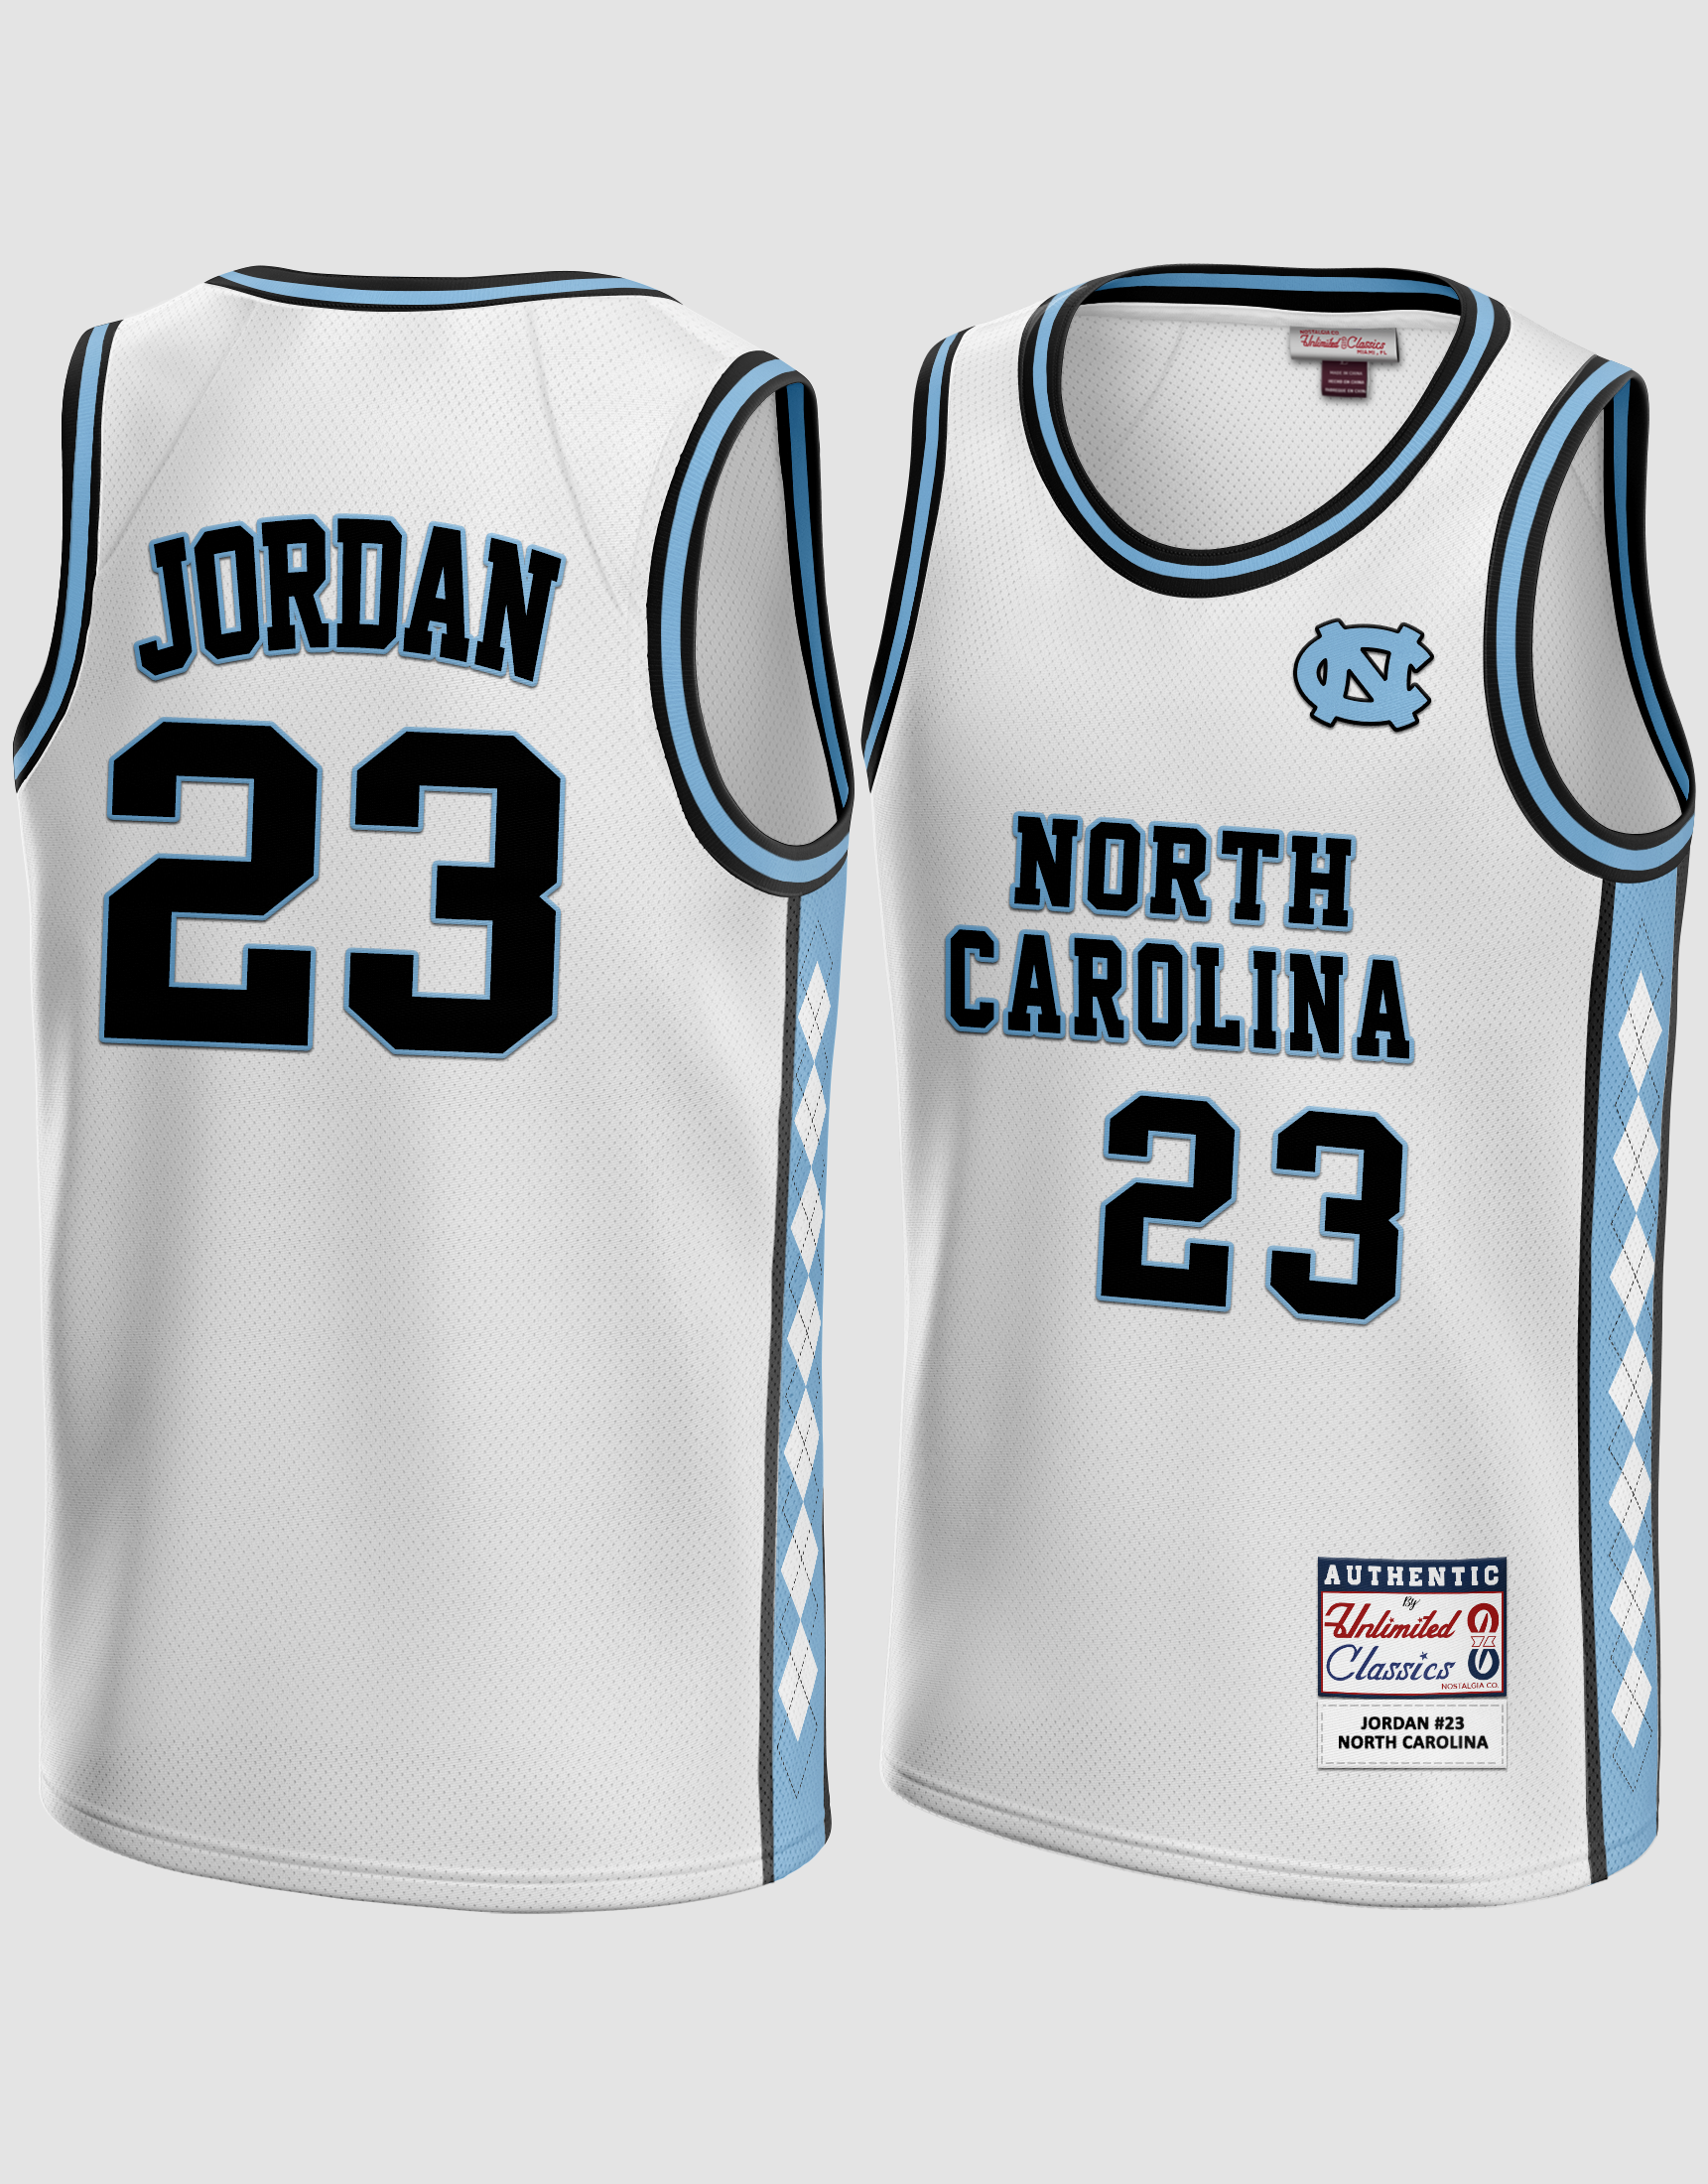 Unlimited Classics North Carolina Michael Jordan #23 White Jersey 3XL